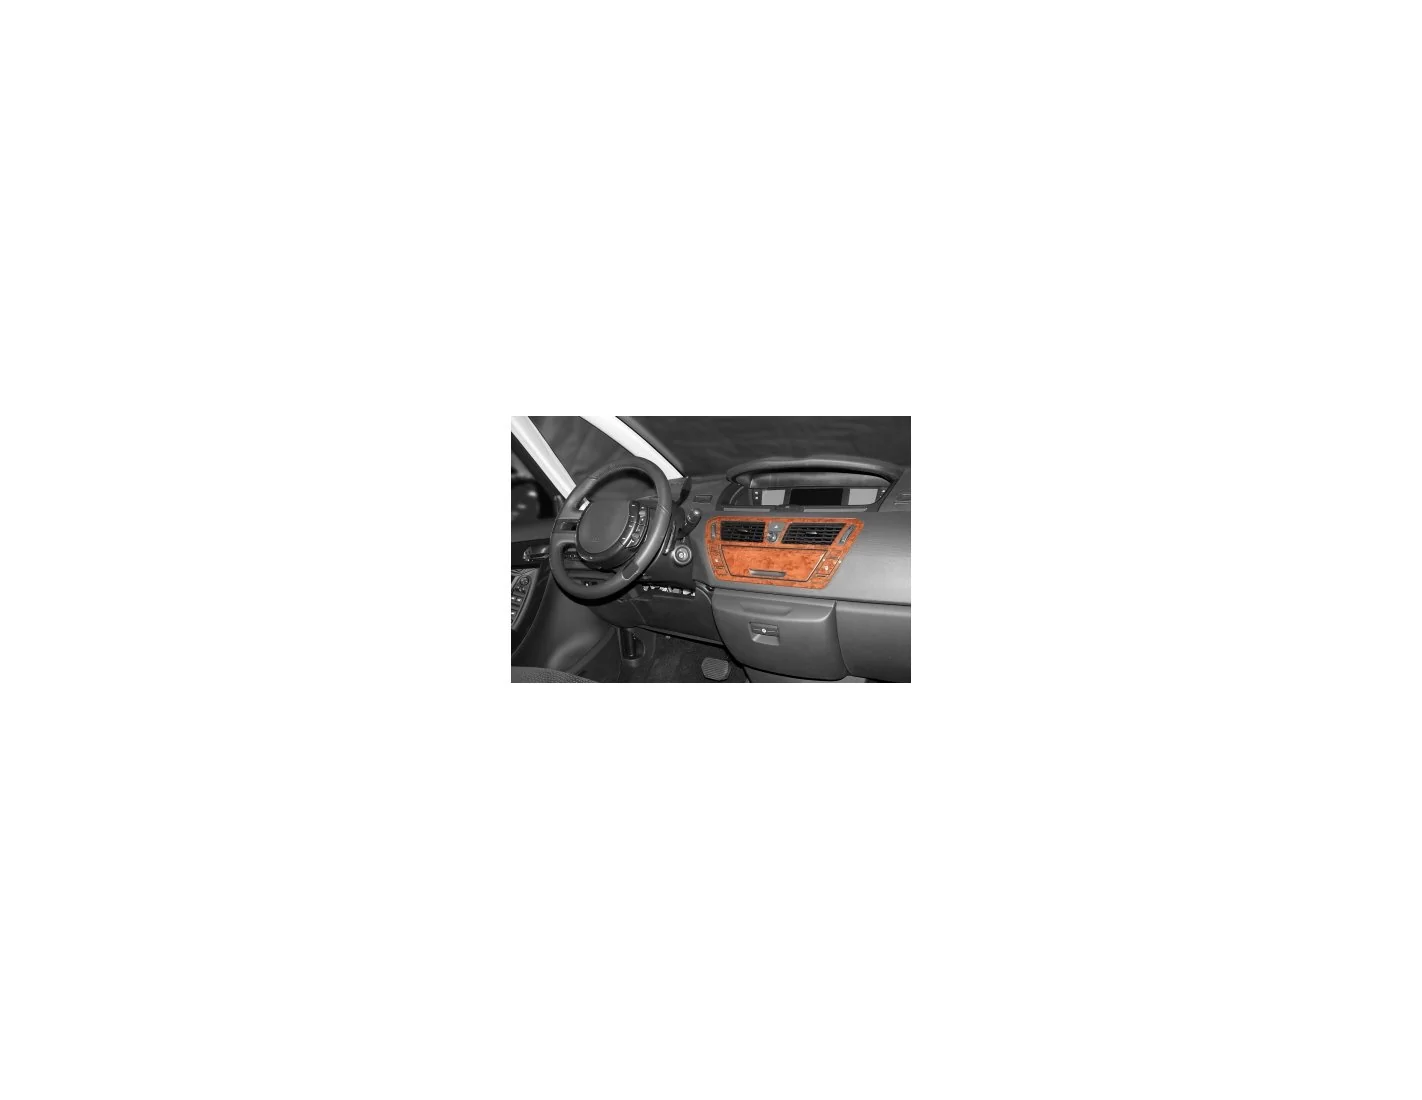 Citroen C4 Picasso 10.2006 3D Decor de carlinga su interior del coche 9-Partes